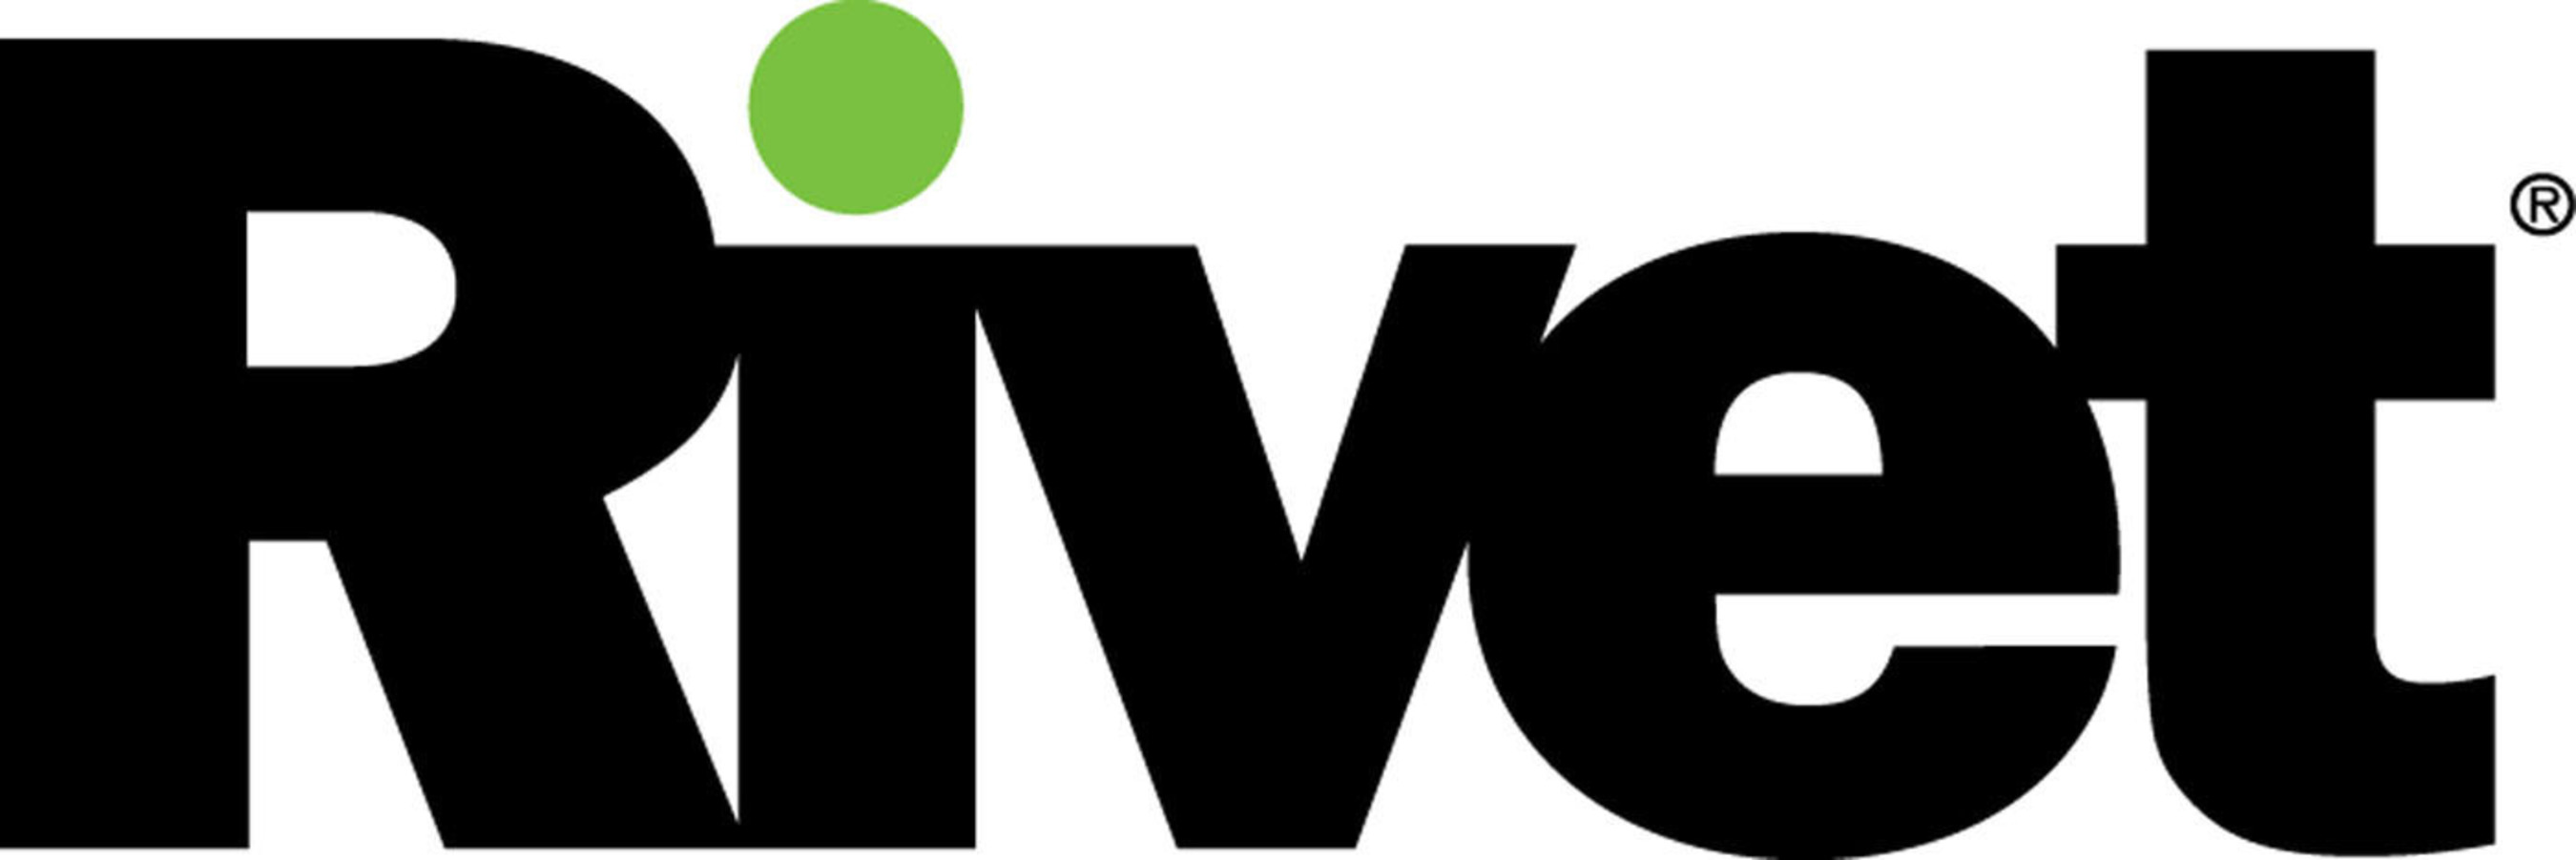 Rivet Software Logo. (PRNewsFoto/Rivet Software) (PRNewsFoto/RIVET SOFTWARE)